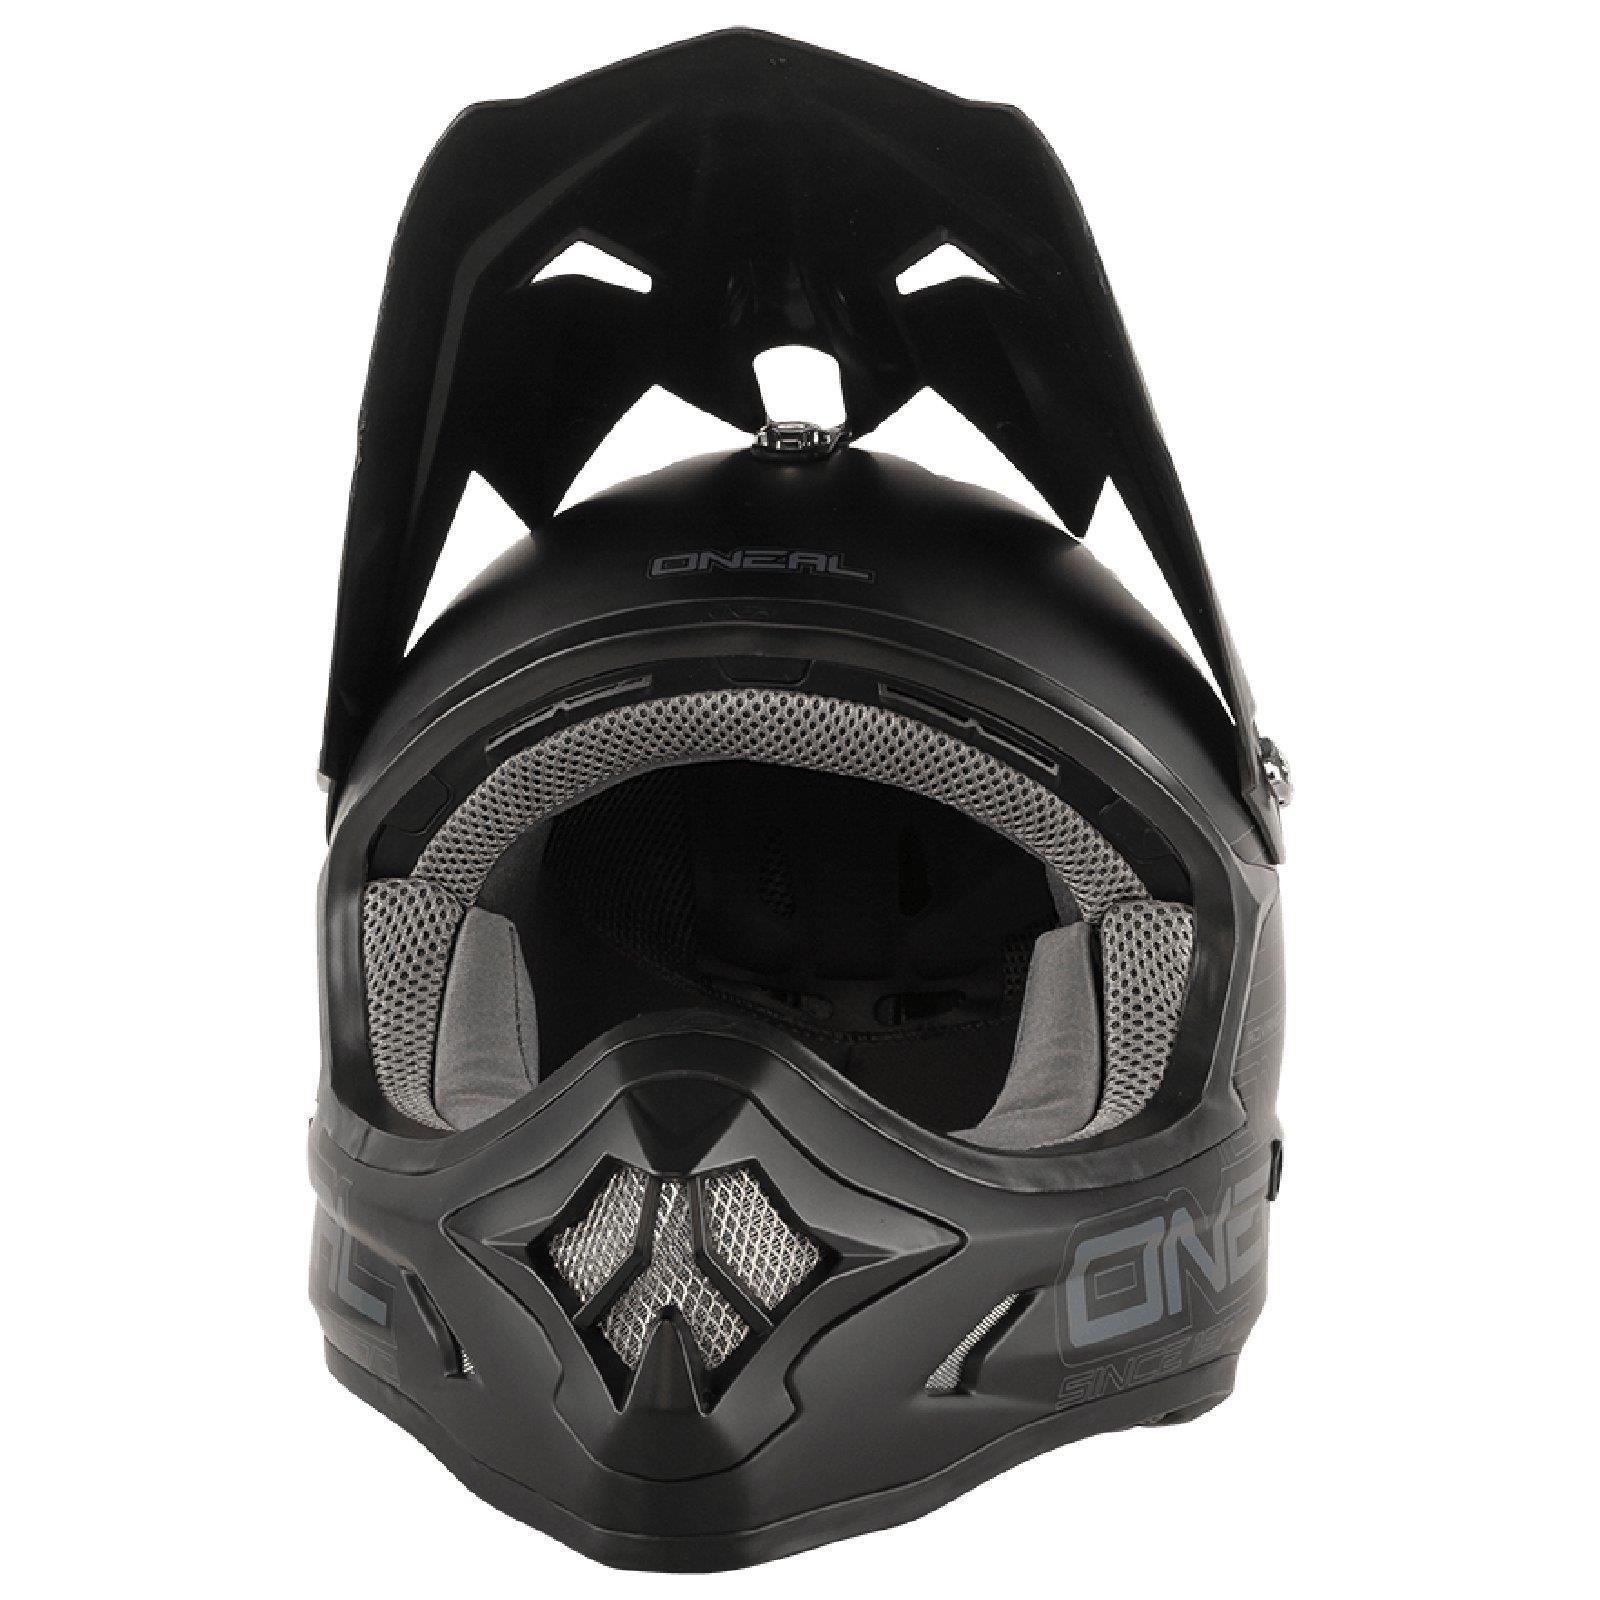 O'Neal 3SRS MX Helmet Flat Black Matt Enduro Moto Cross Motorcycle Offroad Quad | eBay